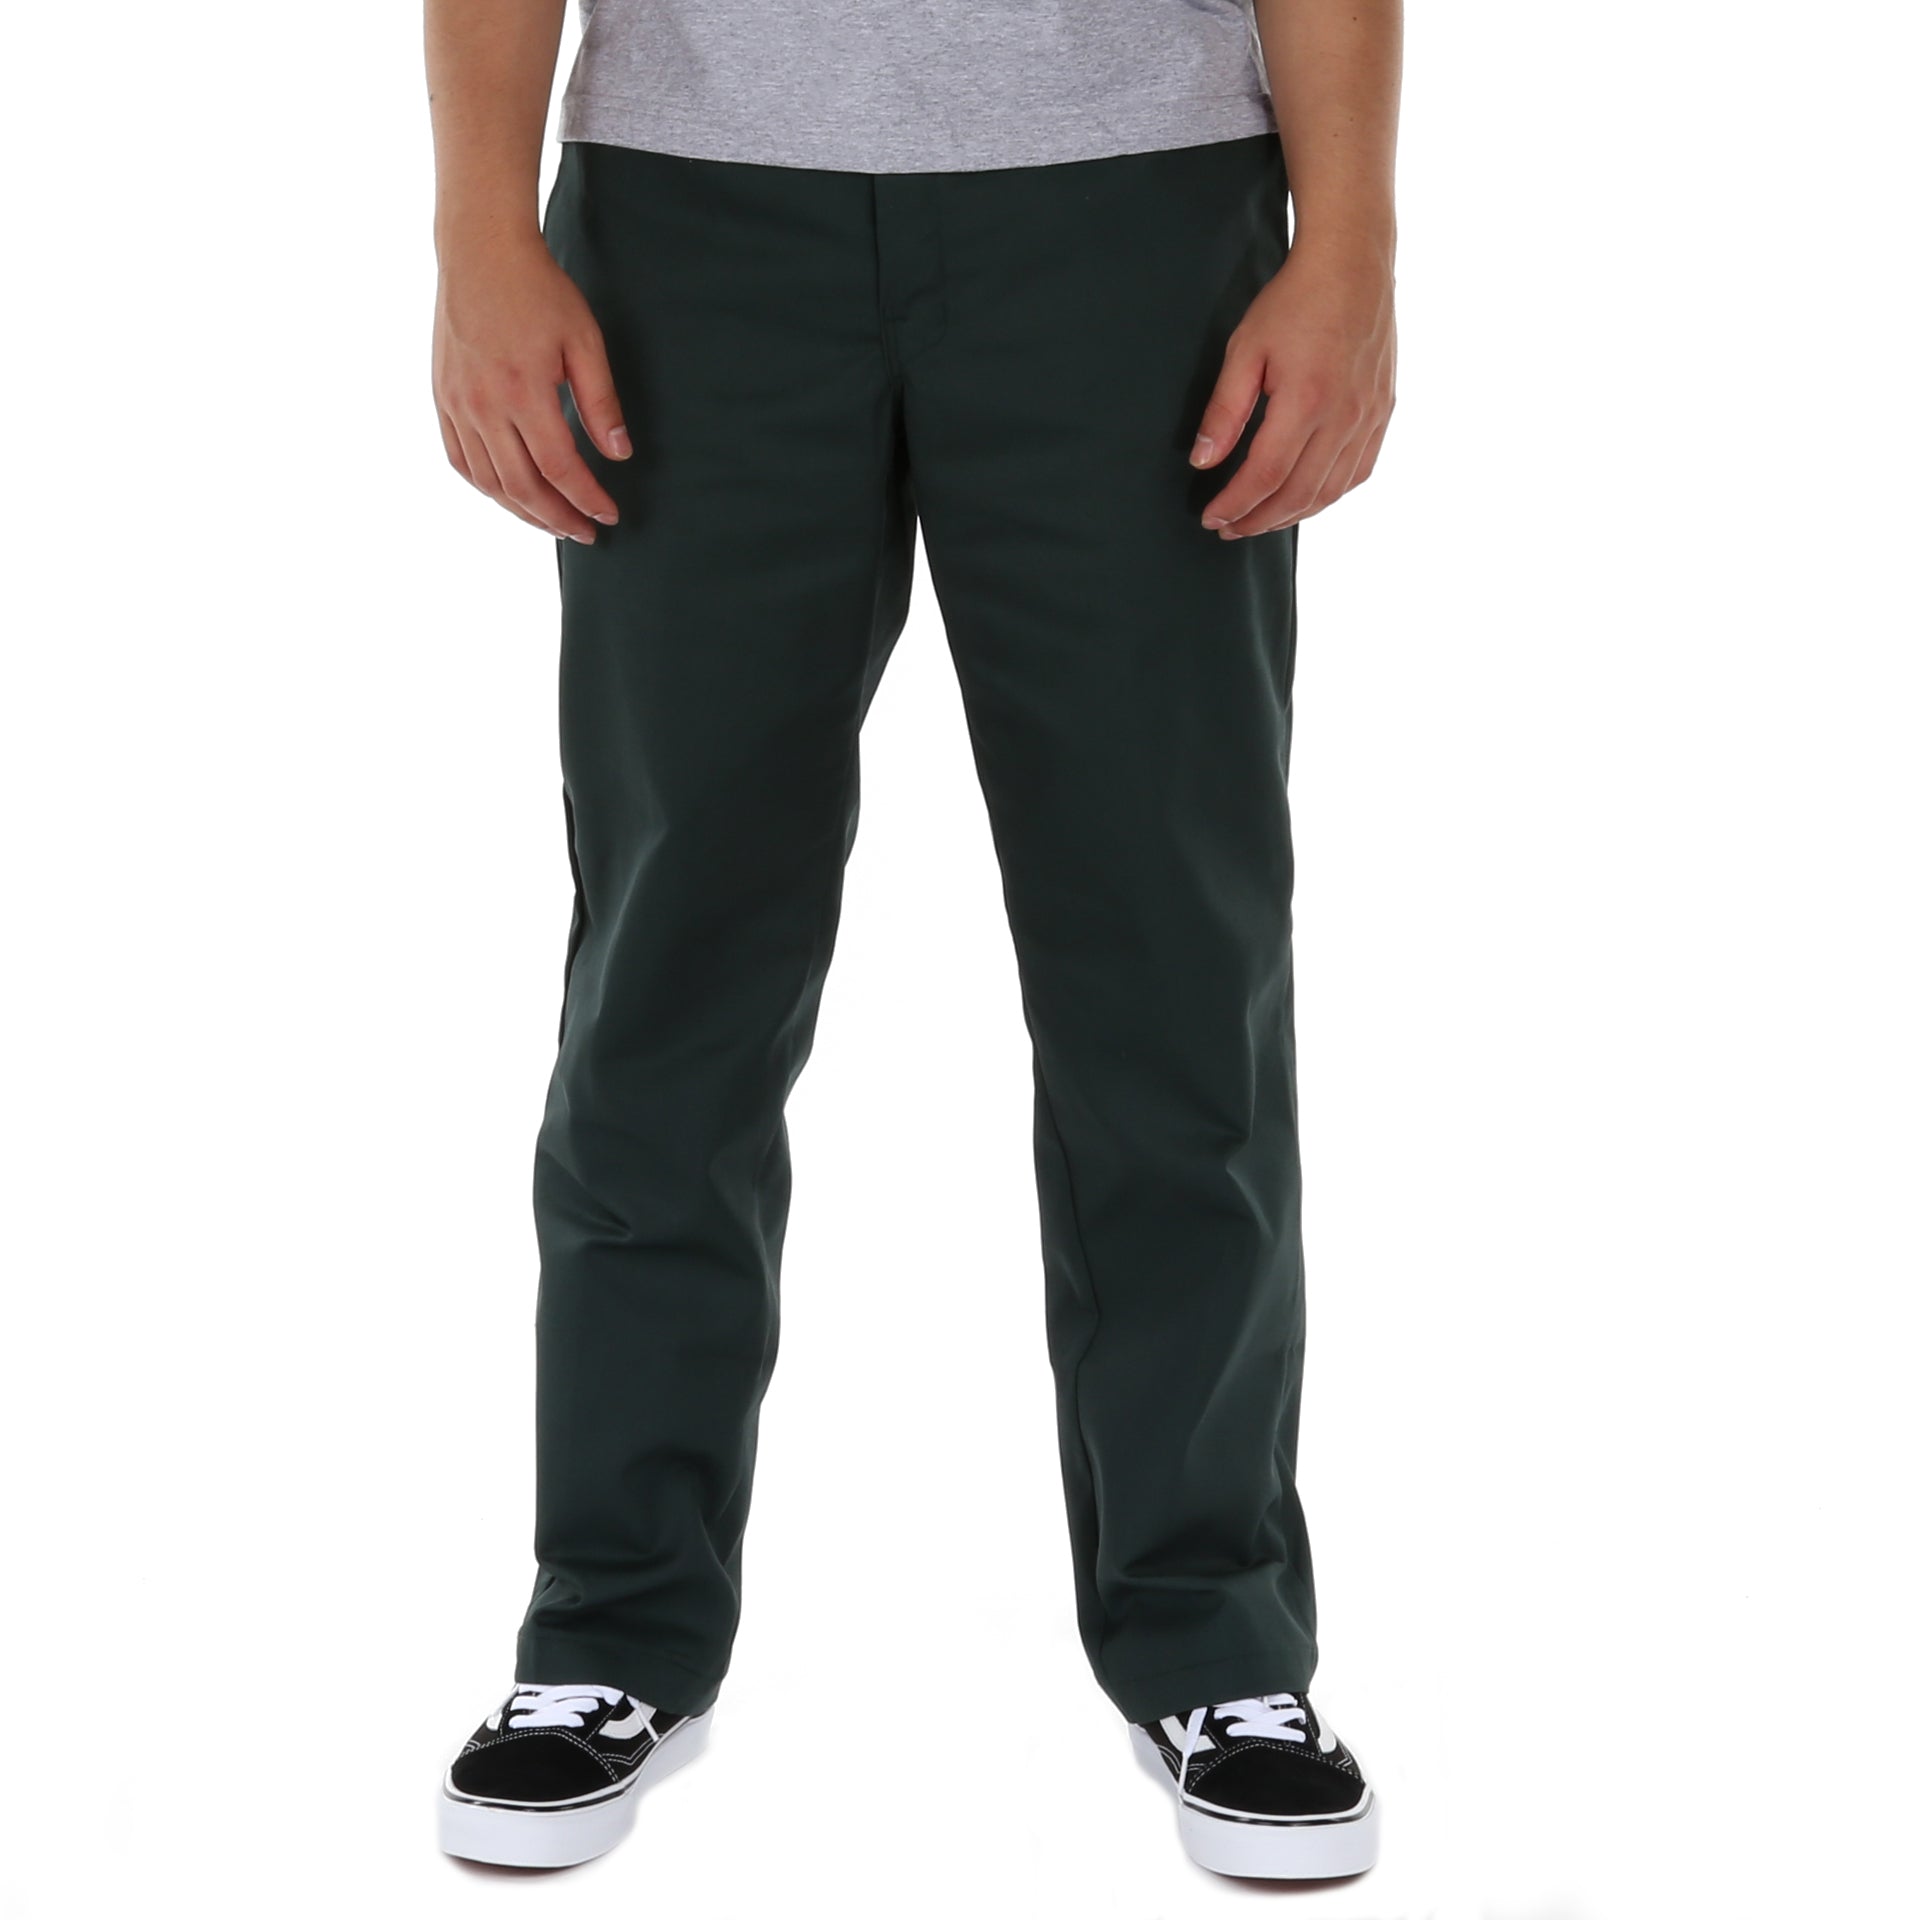 Dickies 874 original fit work trousers in olive green